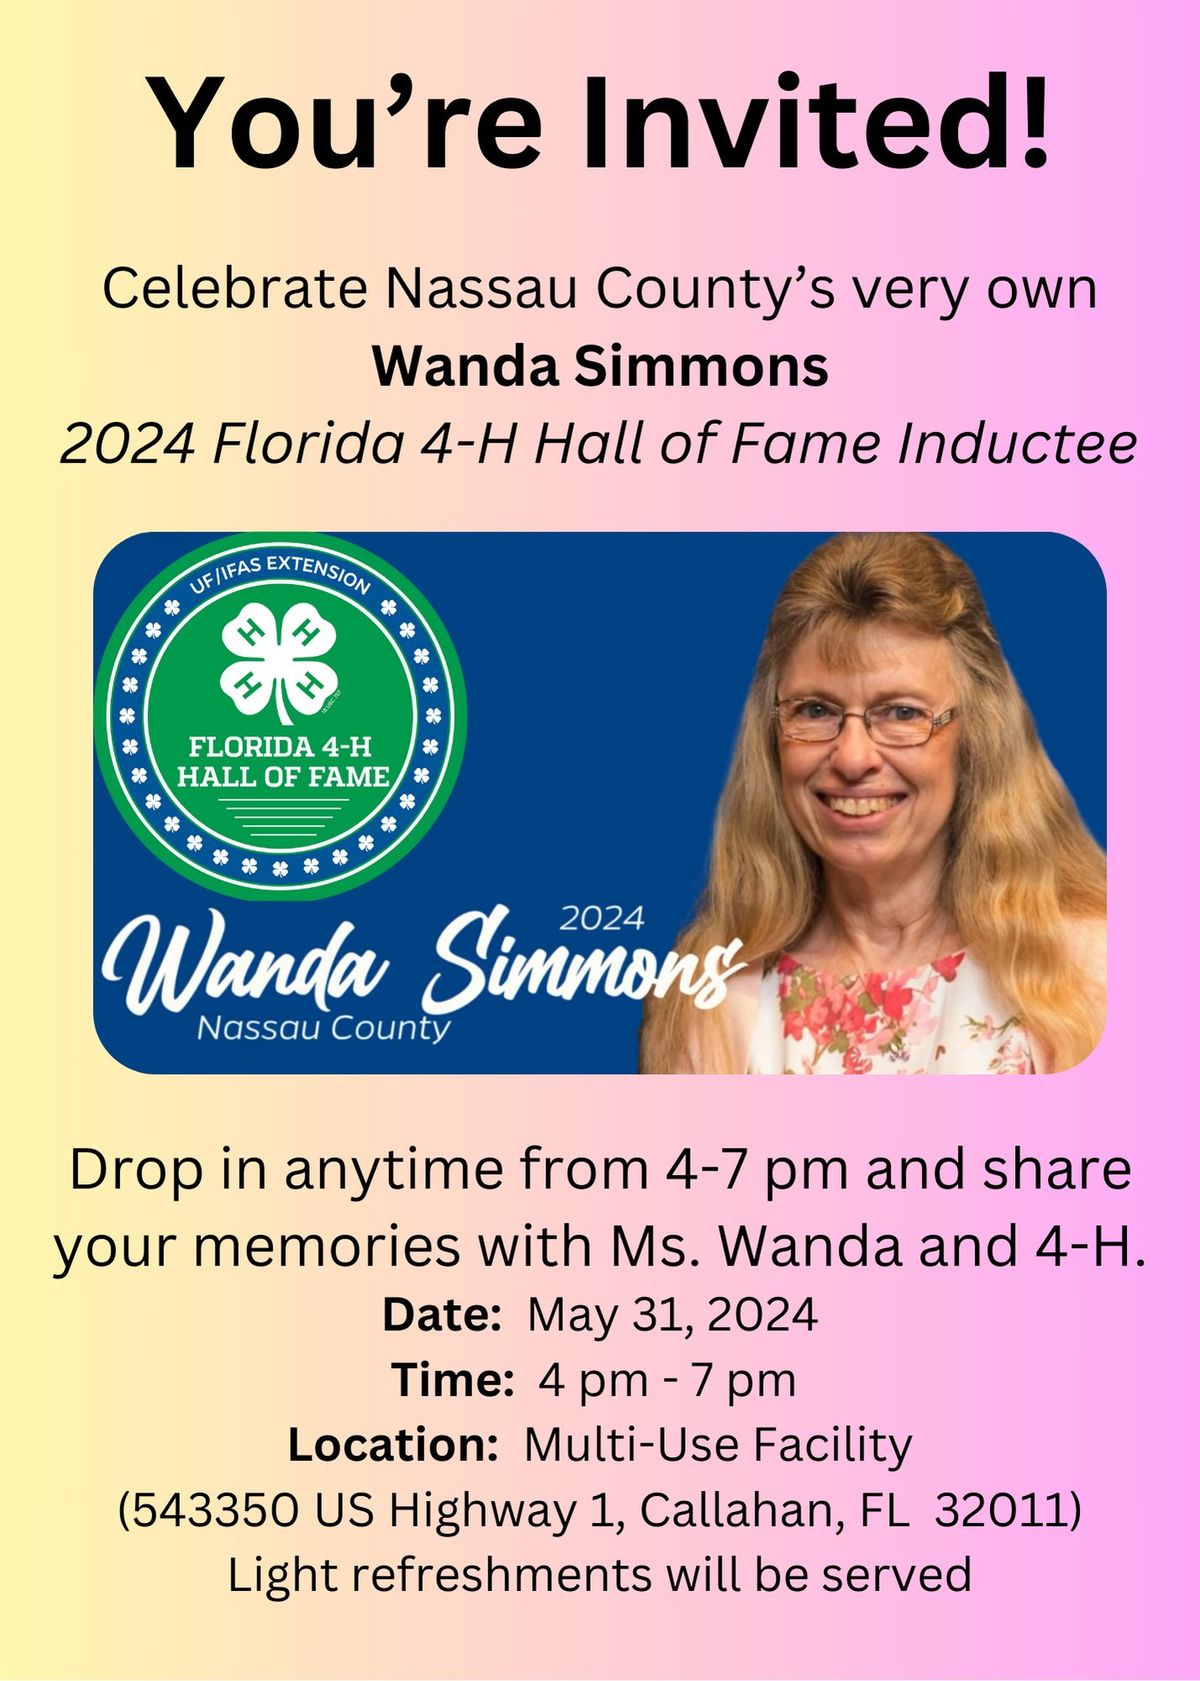 Celebrating Wanda Simmons